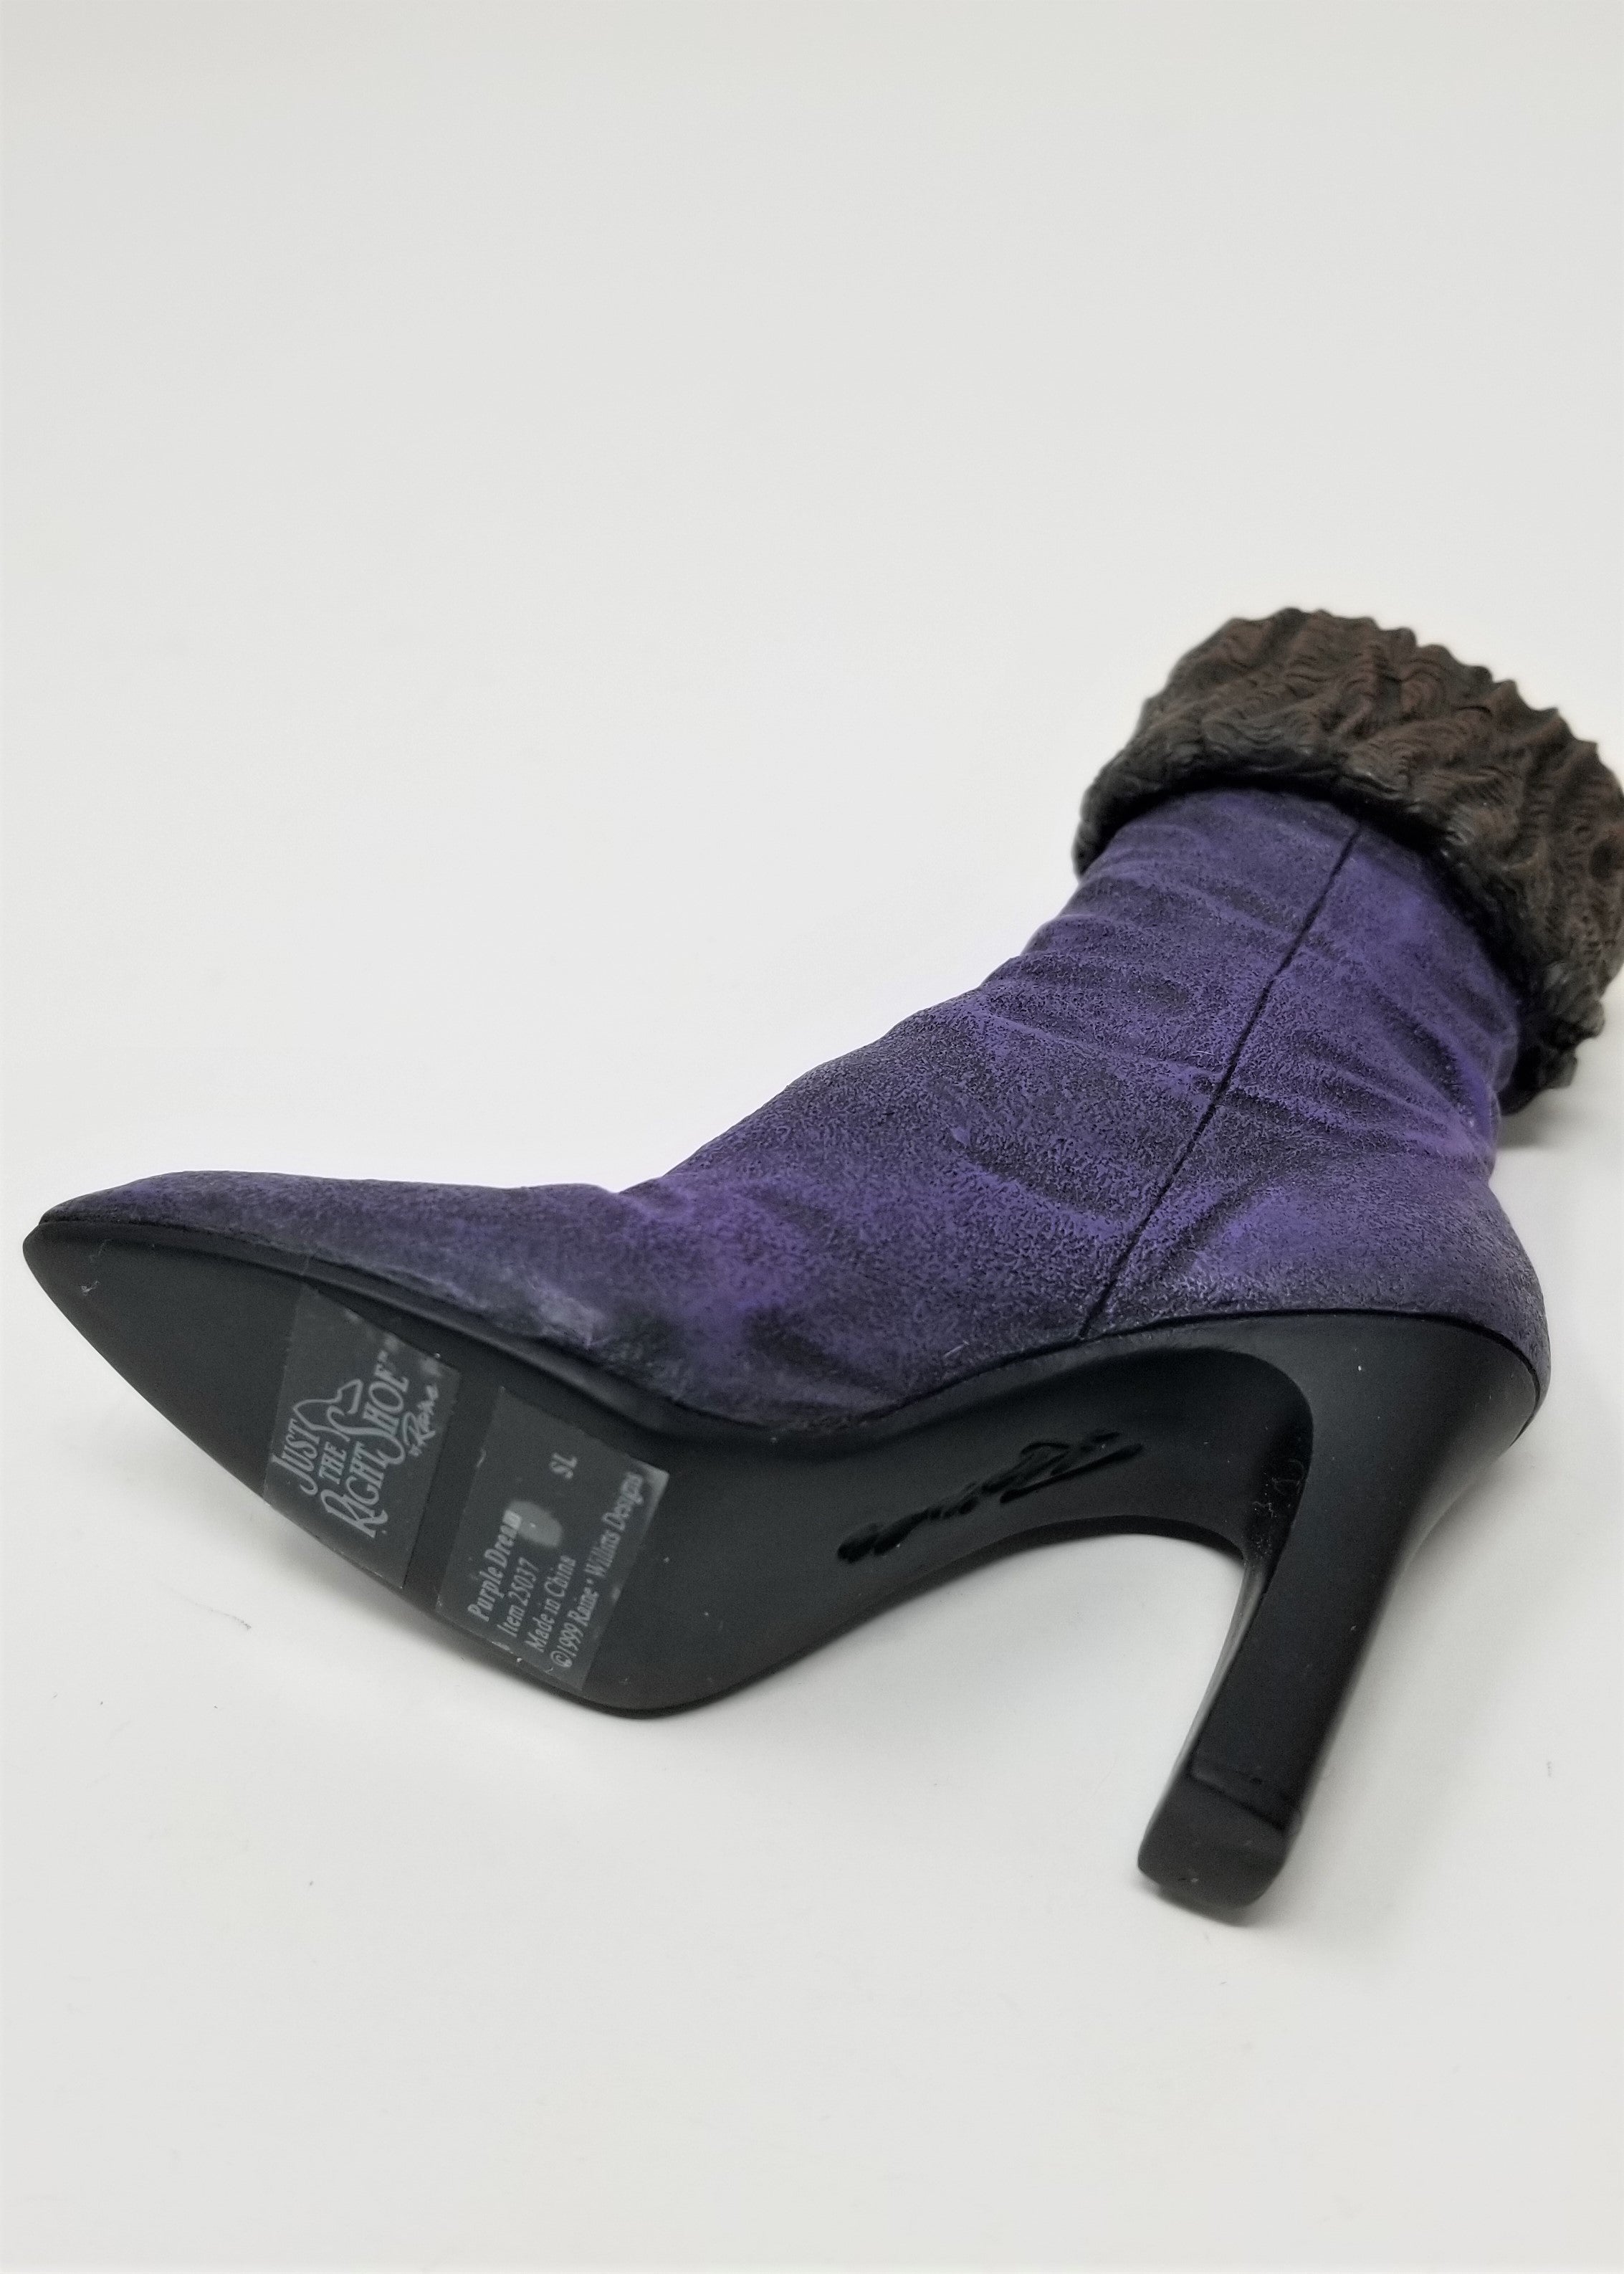 Miniature Boot Purple w/ Cuffed top High Heel